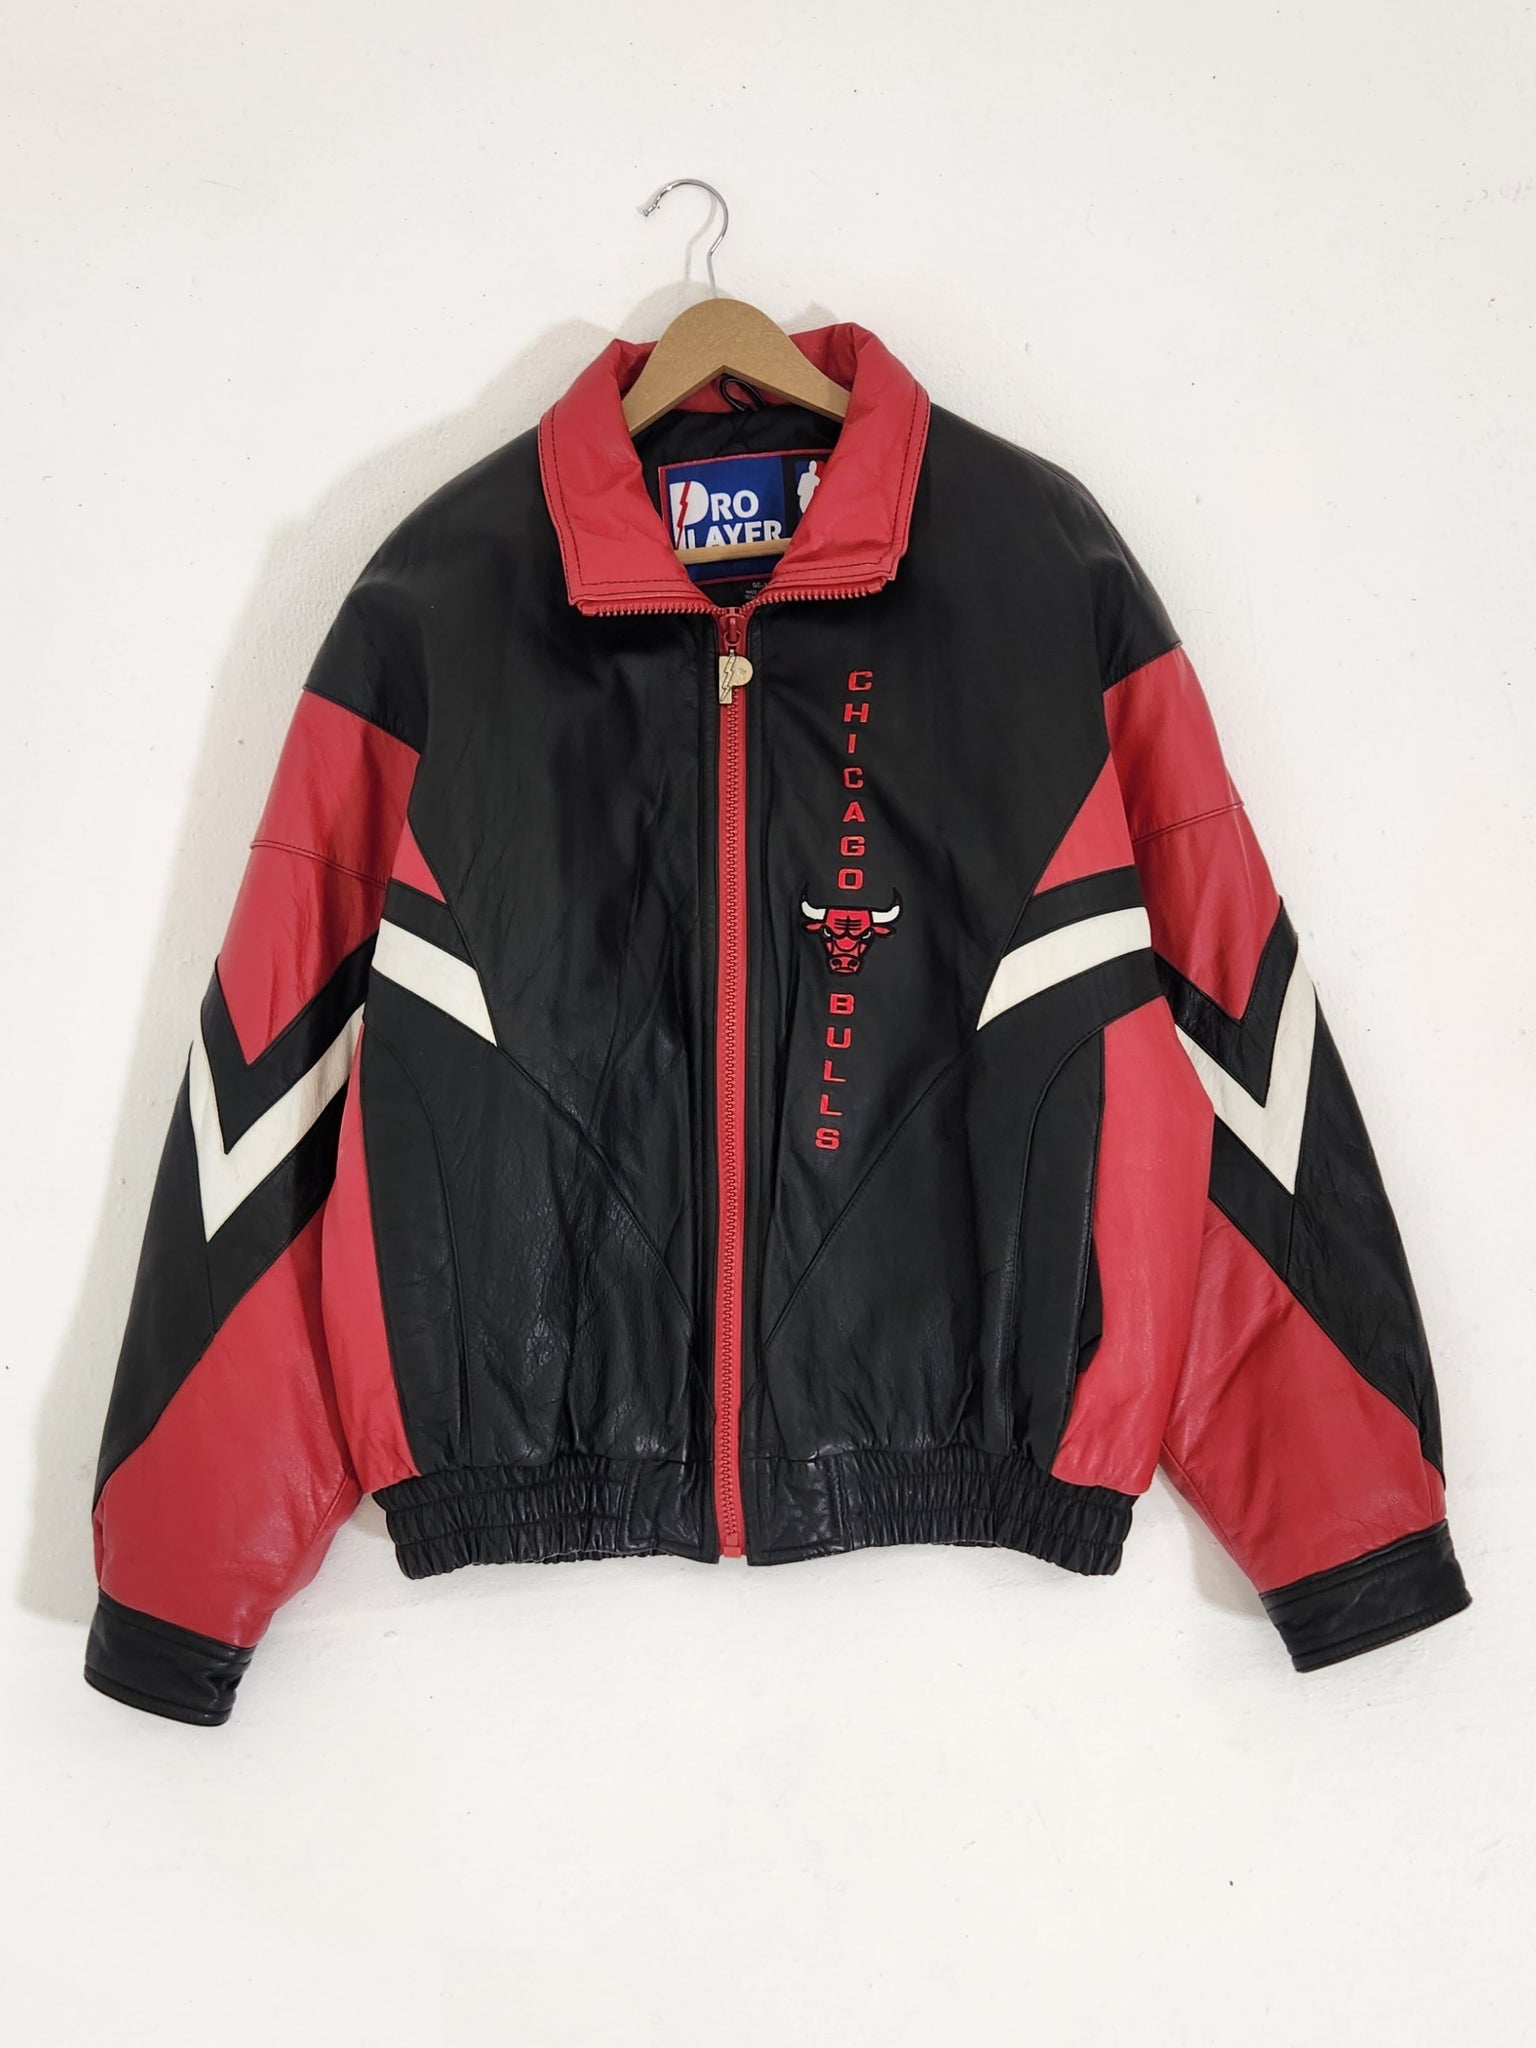 vintage chicago bulls bomber jacket